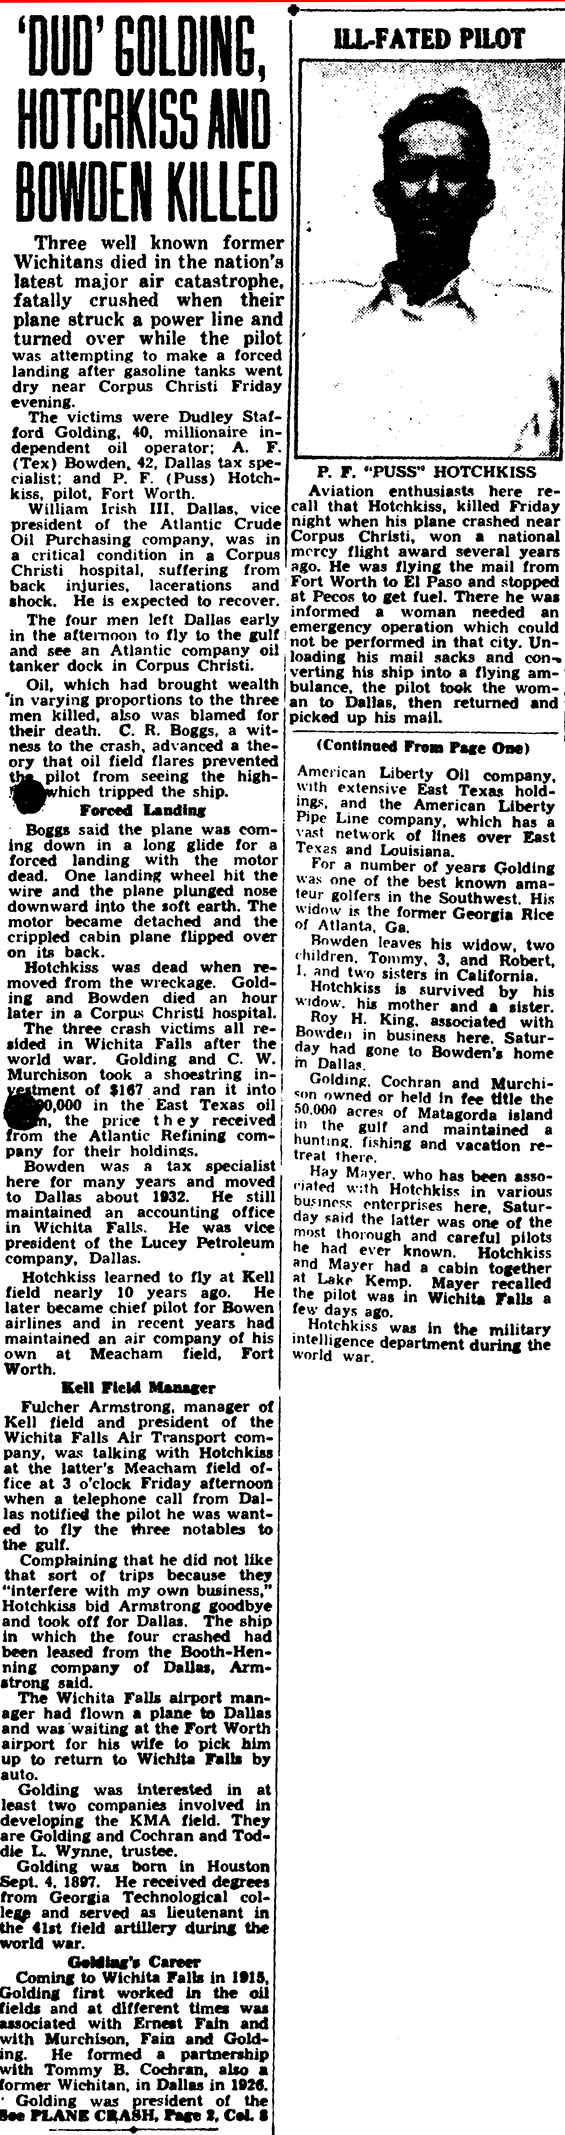 Wichita Falls (TX) Daily Times, March 5, 1938 (Source: Woodling)